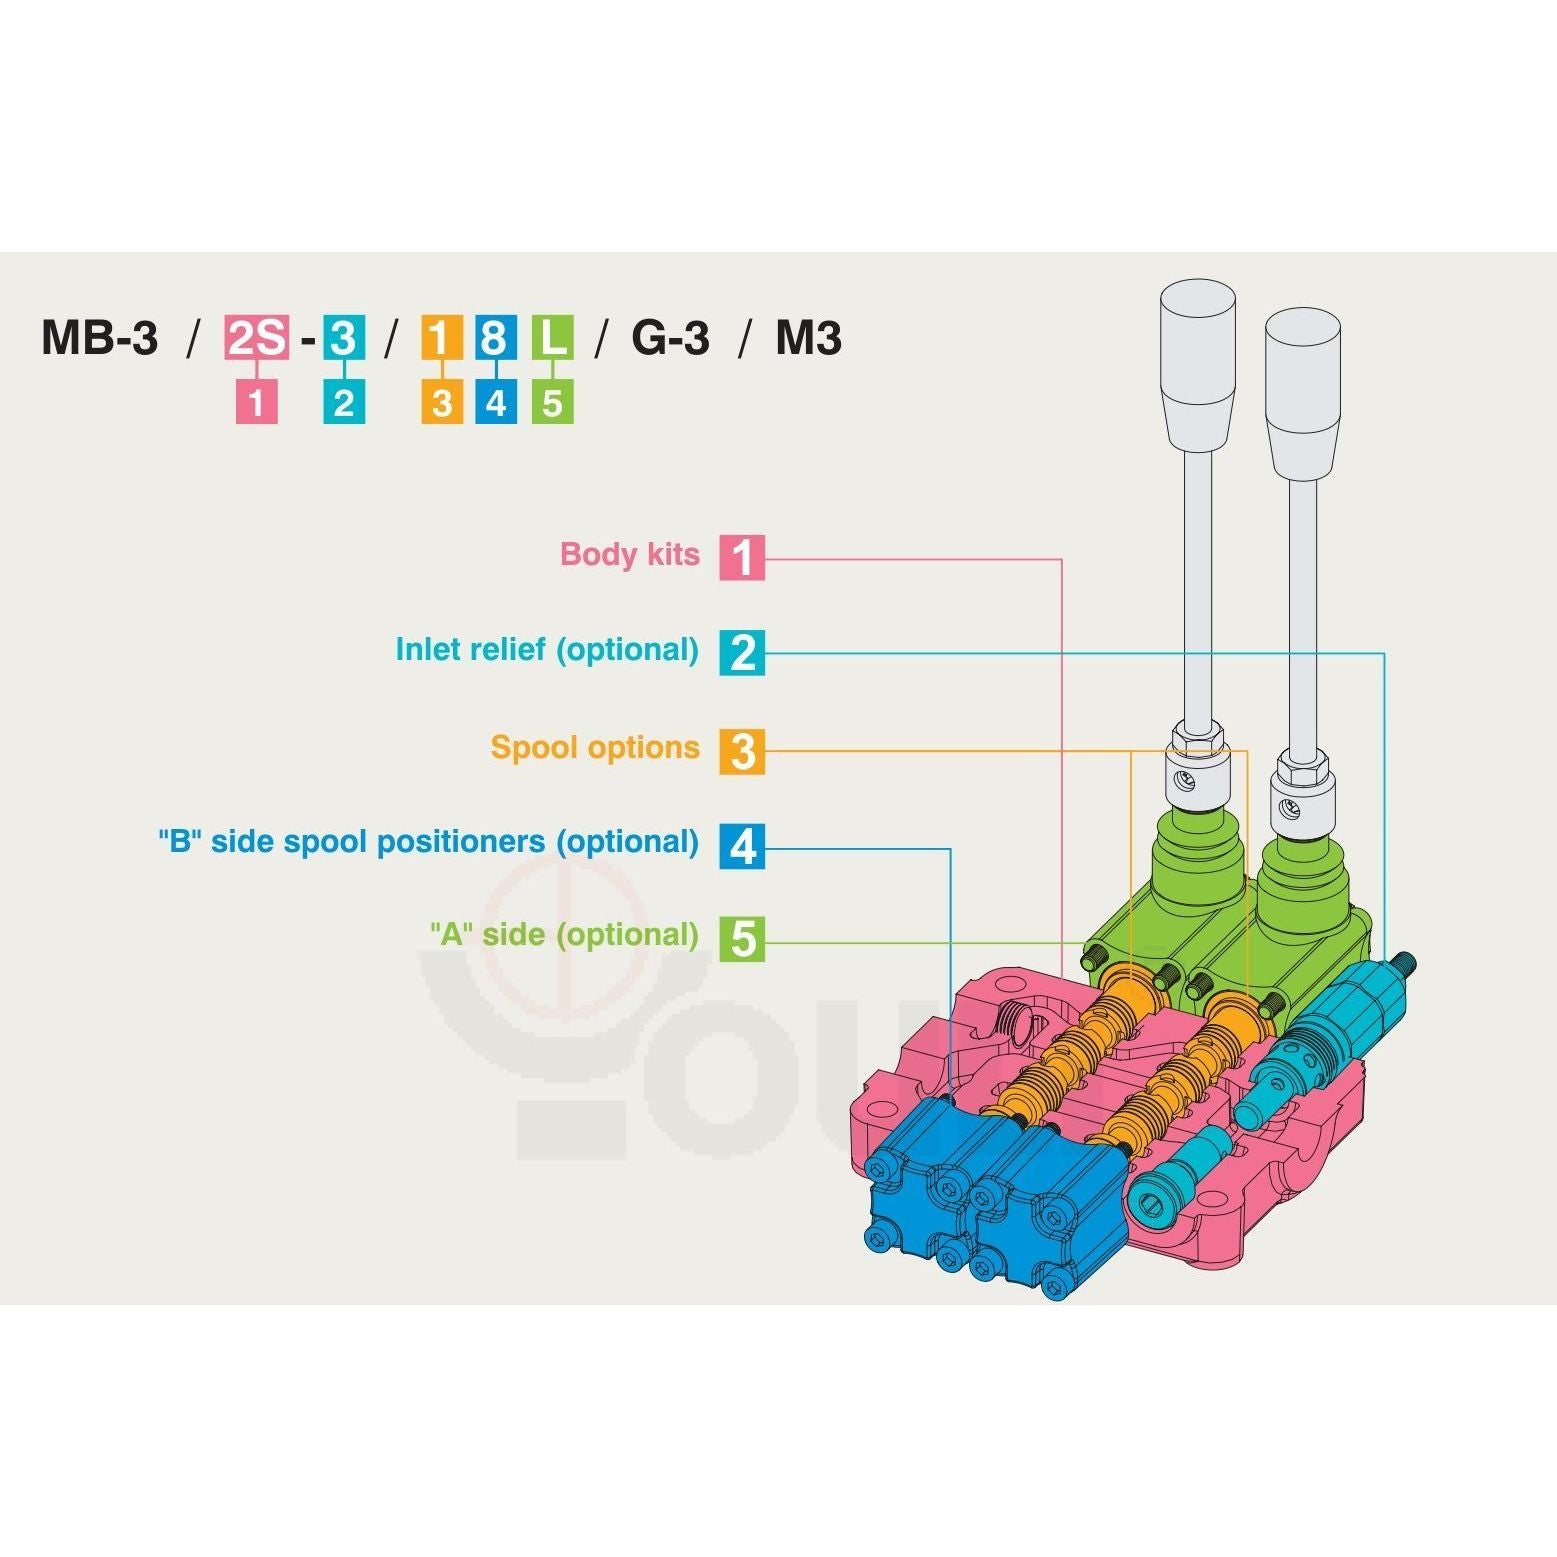 MB-3 Monoblock Valve, 4 Section : Youli MB-3 Series Monoblock Directional Control Valve, 4 Sections, 12 gpm, 900-2900 psi